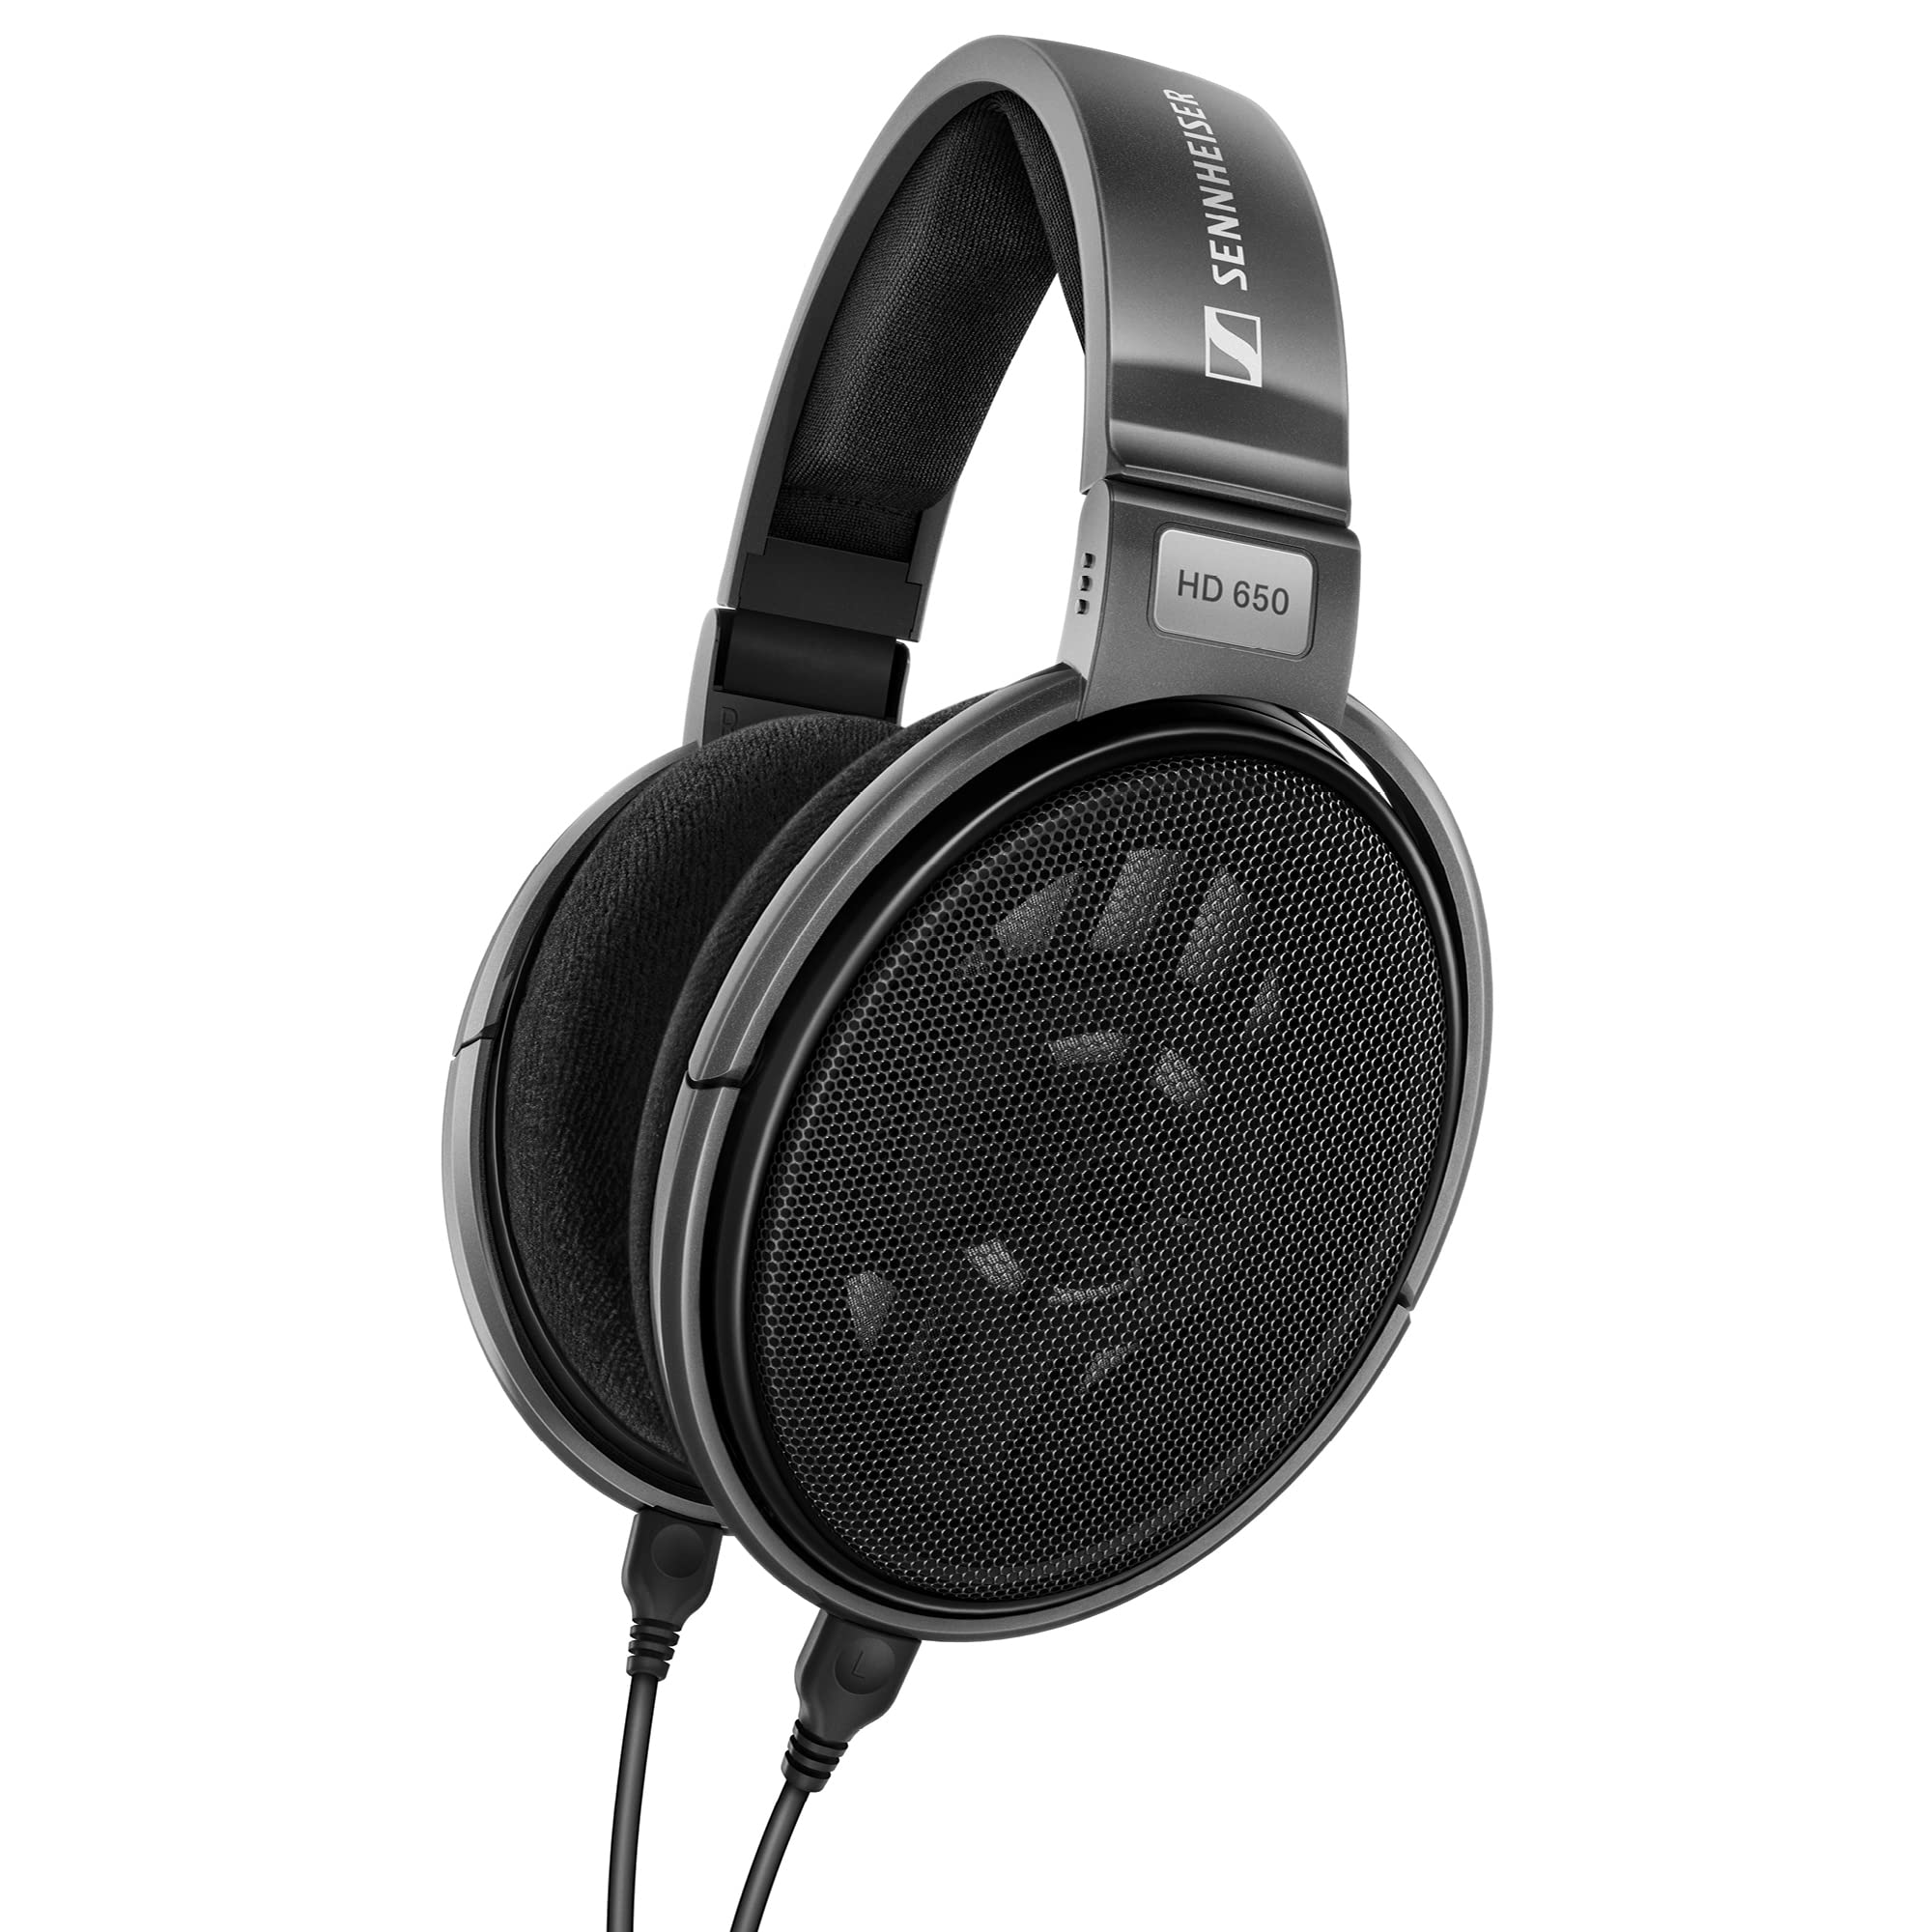 Audiophile Hi-Res Open Back Dynamic Headphone